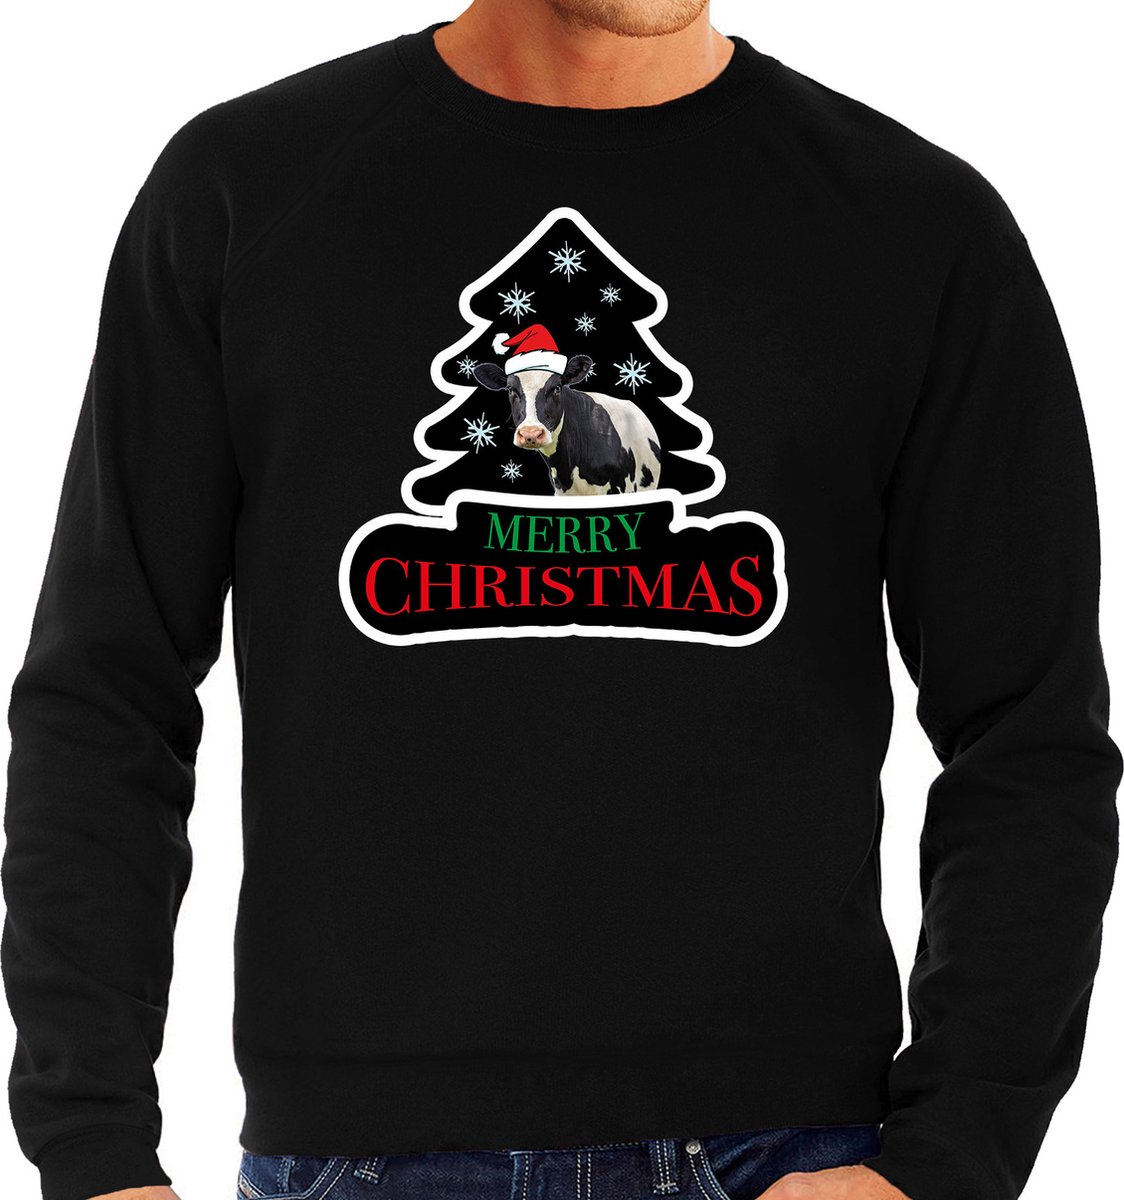 Dieren kersttrui koe zwart heren - Foute koeien kerstsweater - Kerst outfit dieren liefhebber M